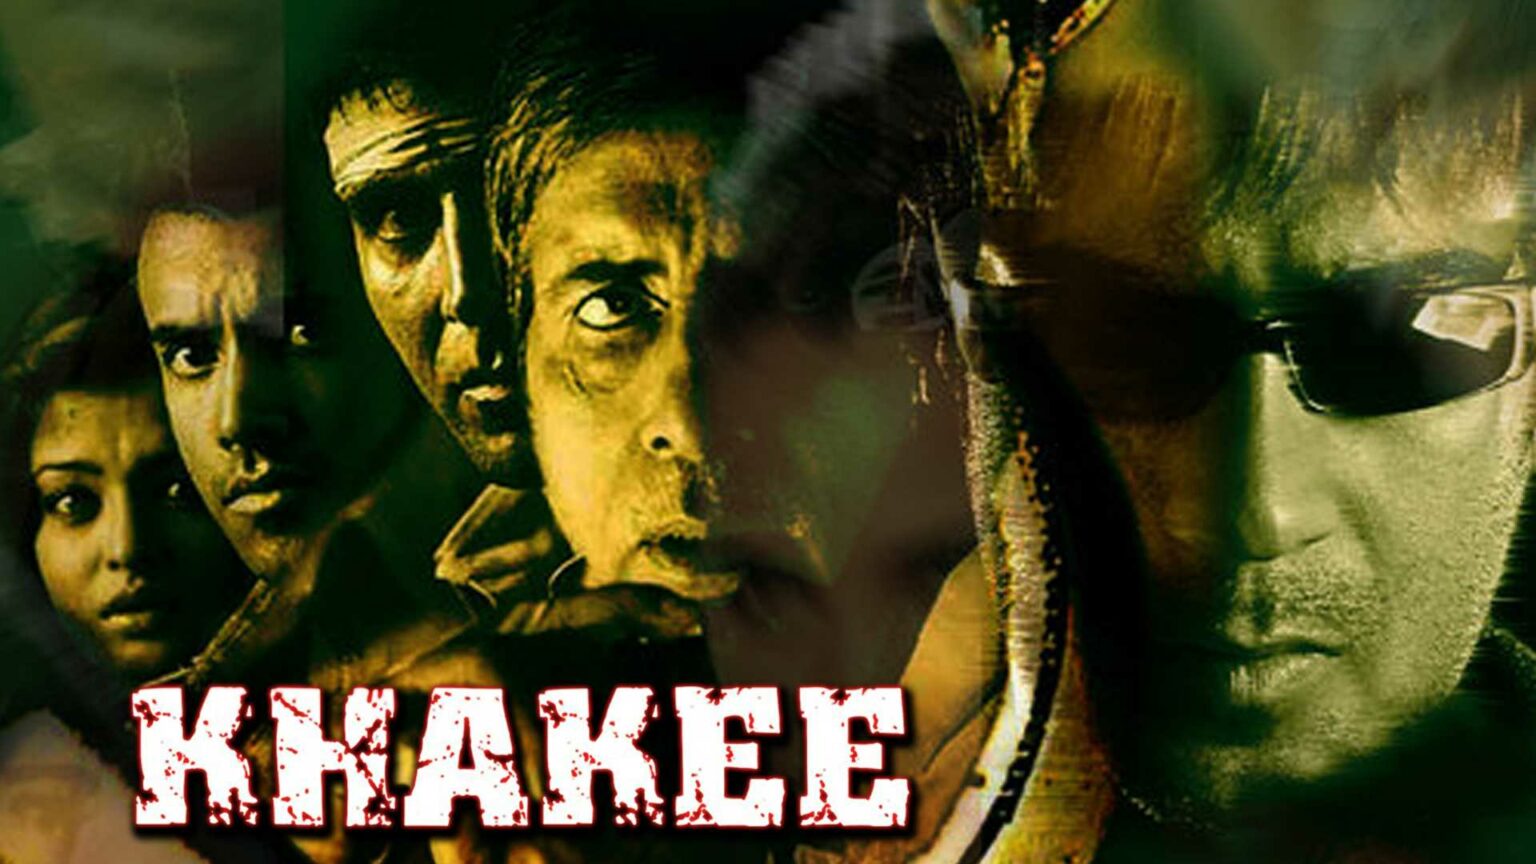 kake da kharak full movie in punjabi hd free download